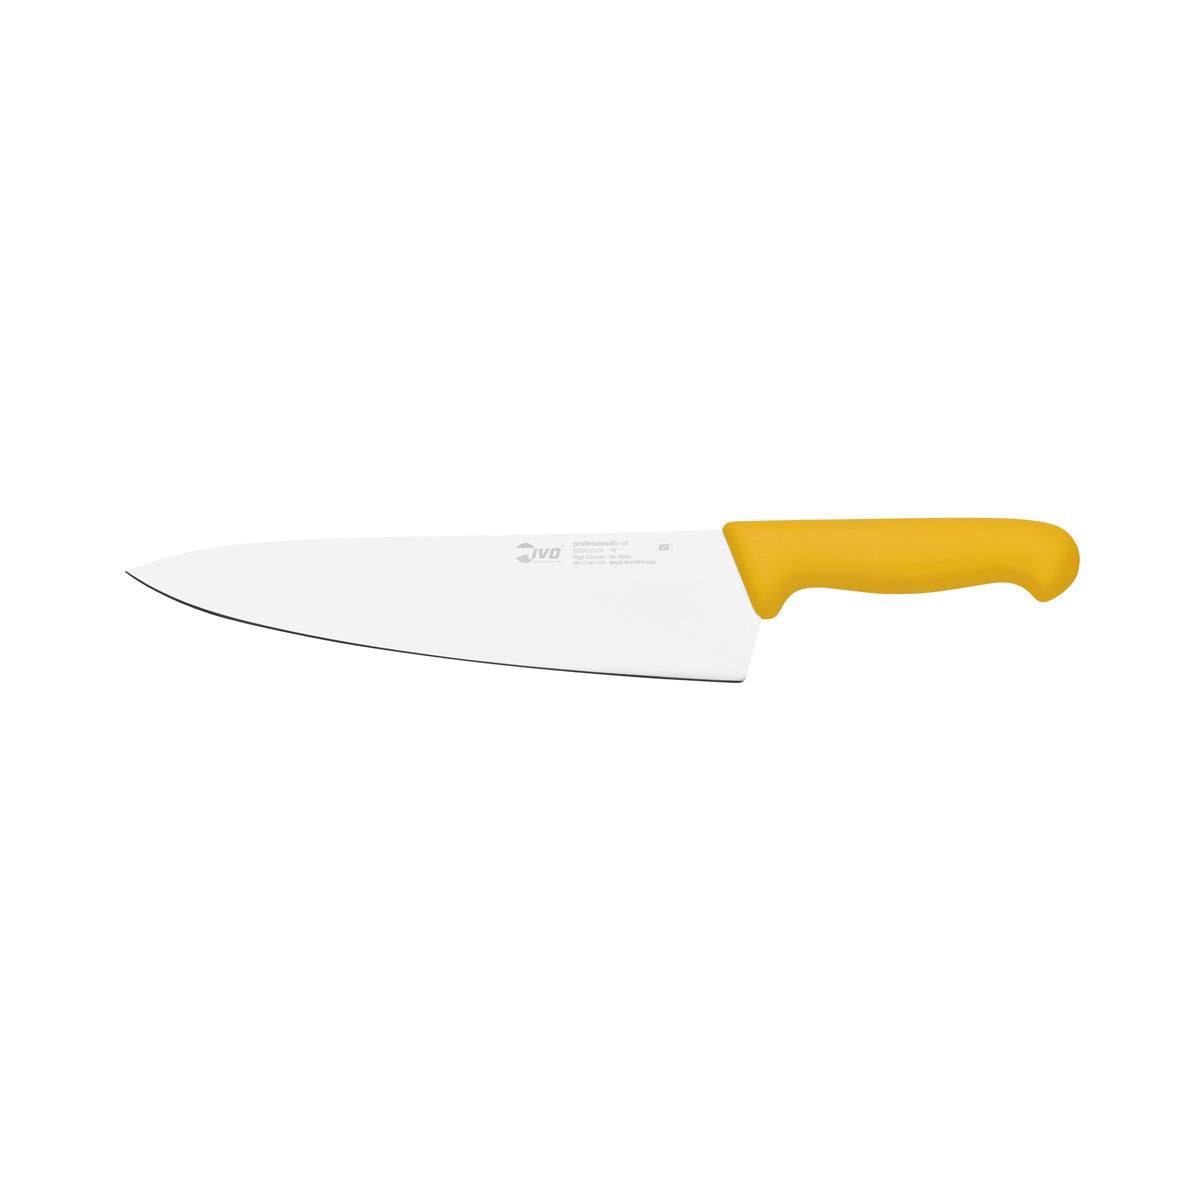 25495 Ivo Professional Line I Chefs Knife Yellow 250mm Tomkin Australia Hospitality Supplies